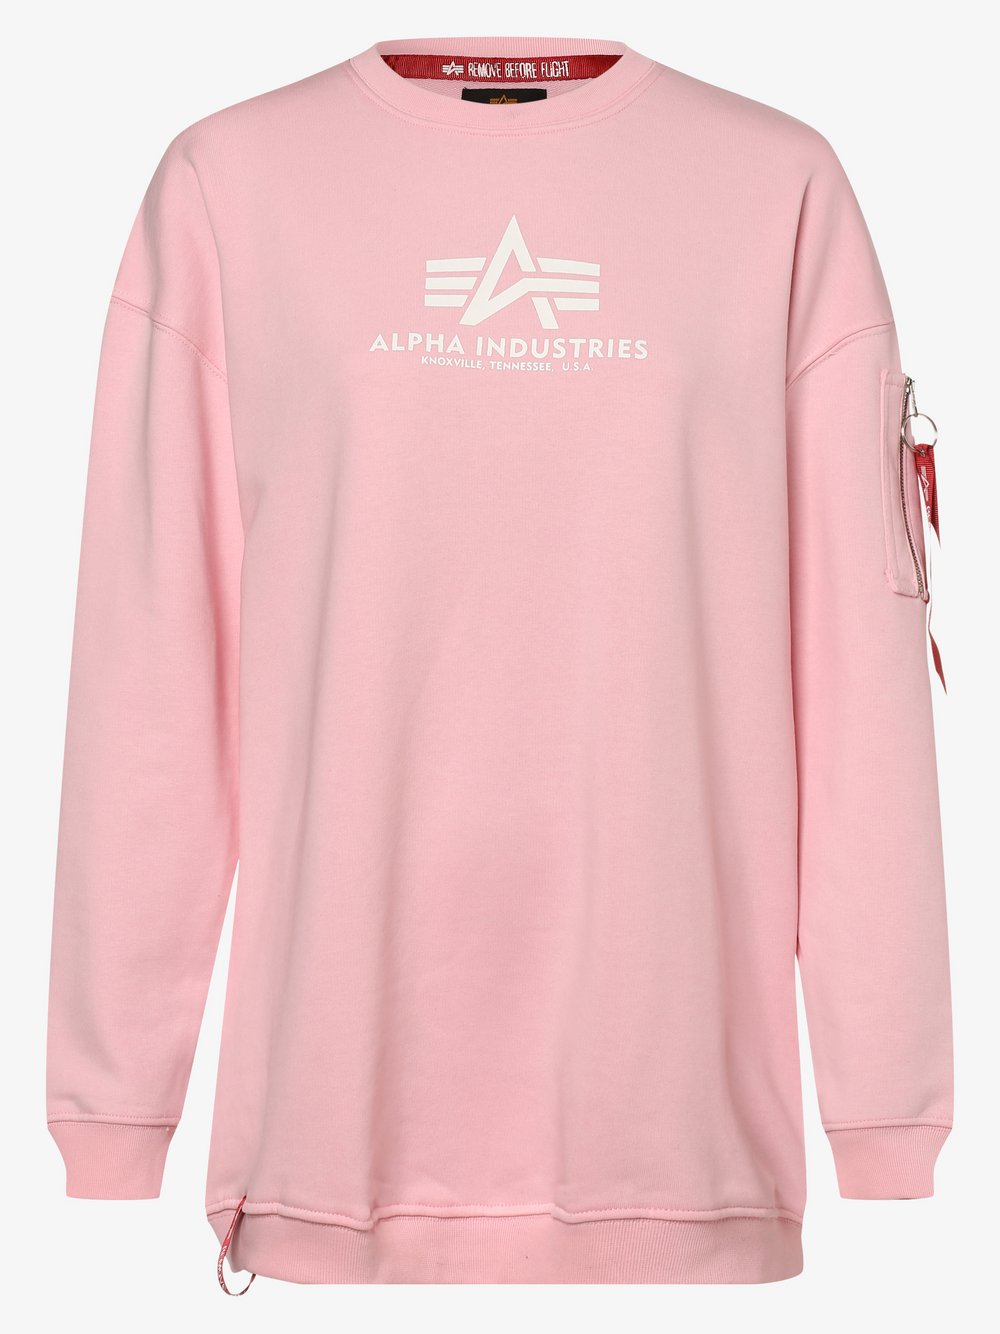 Alpha Industries - Damska sukienka dresowa, różowy